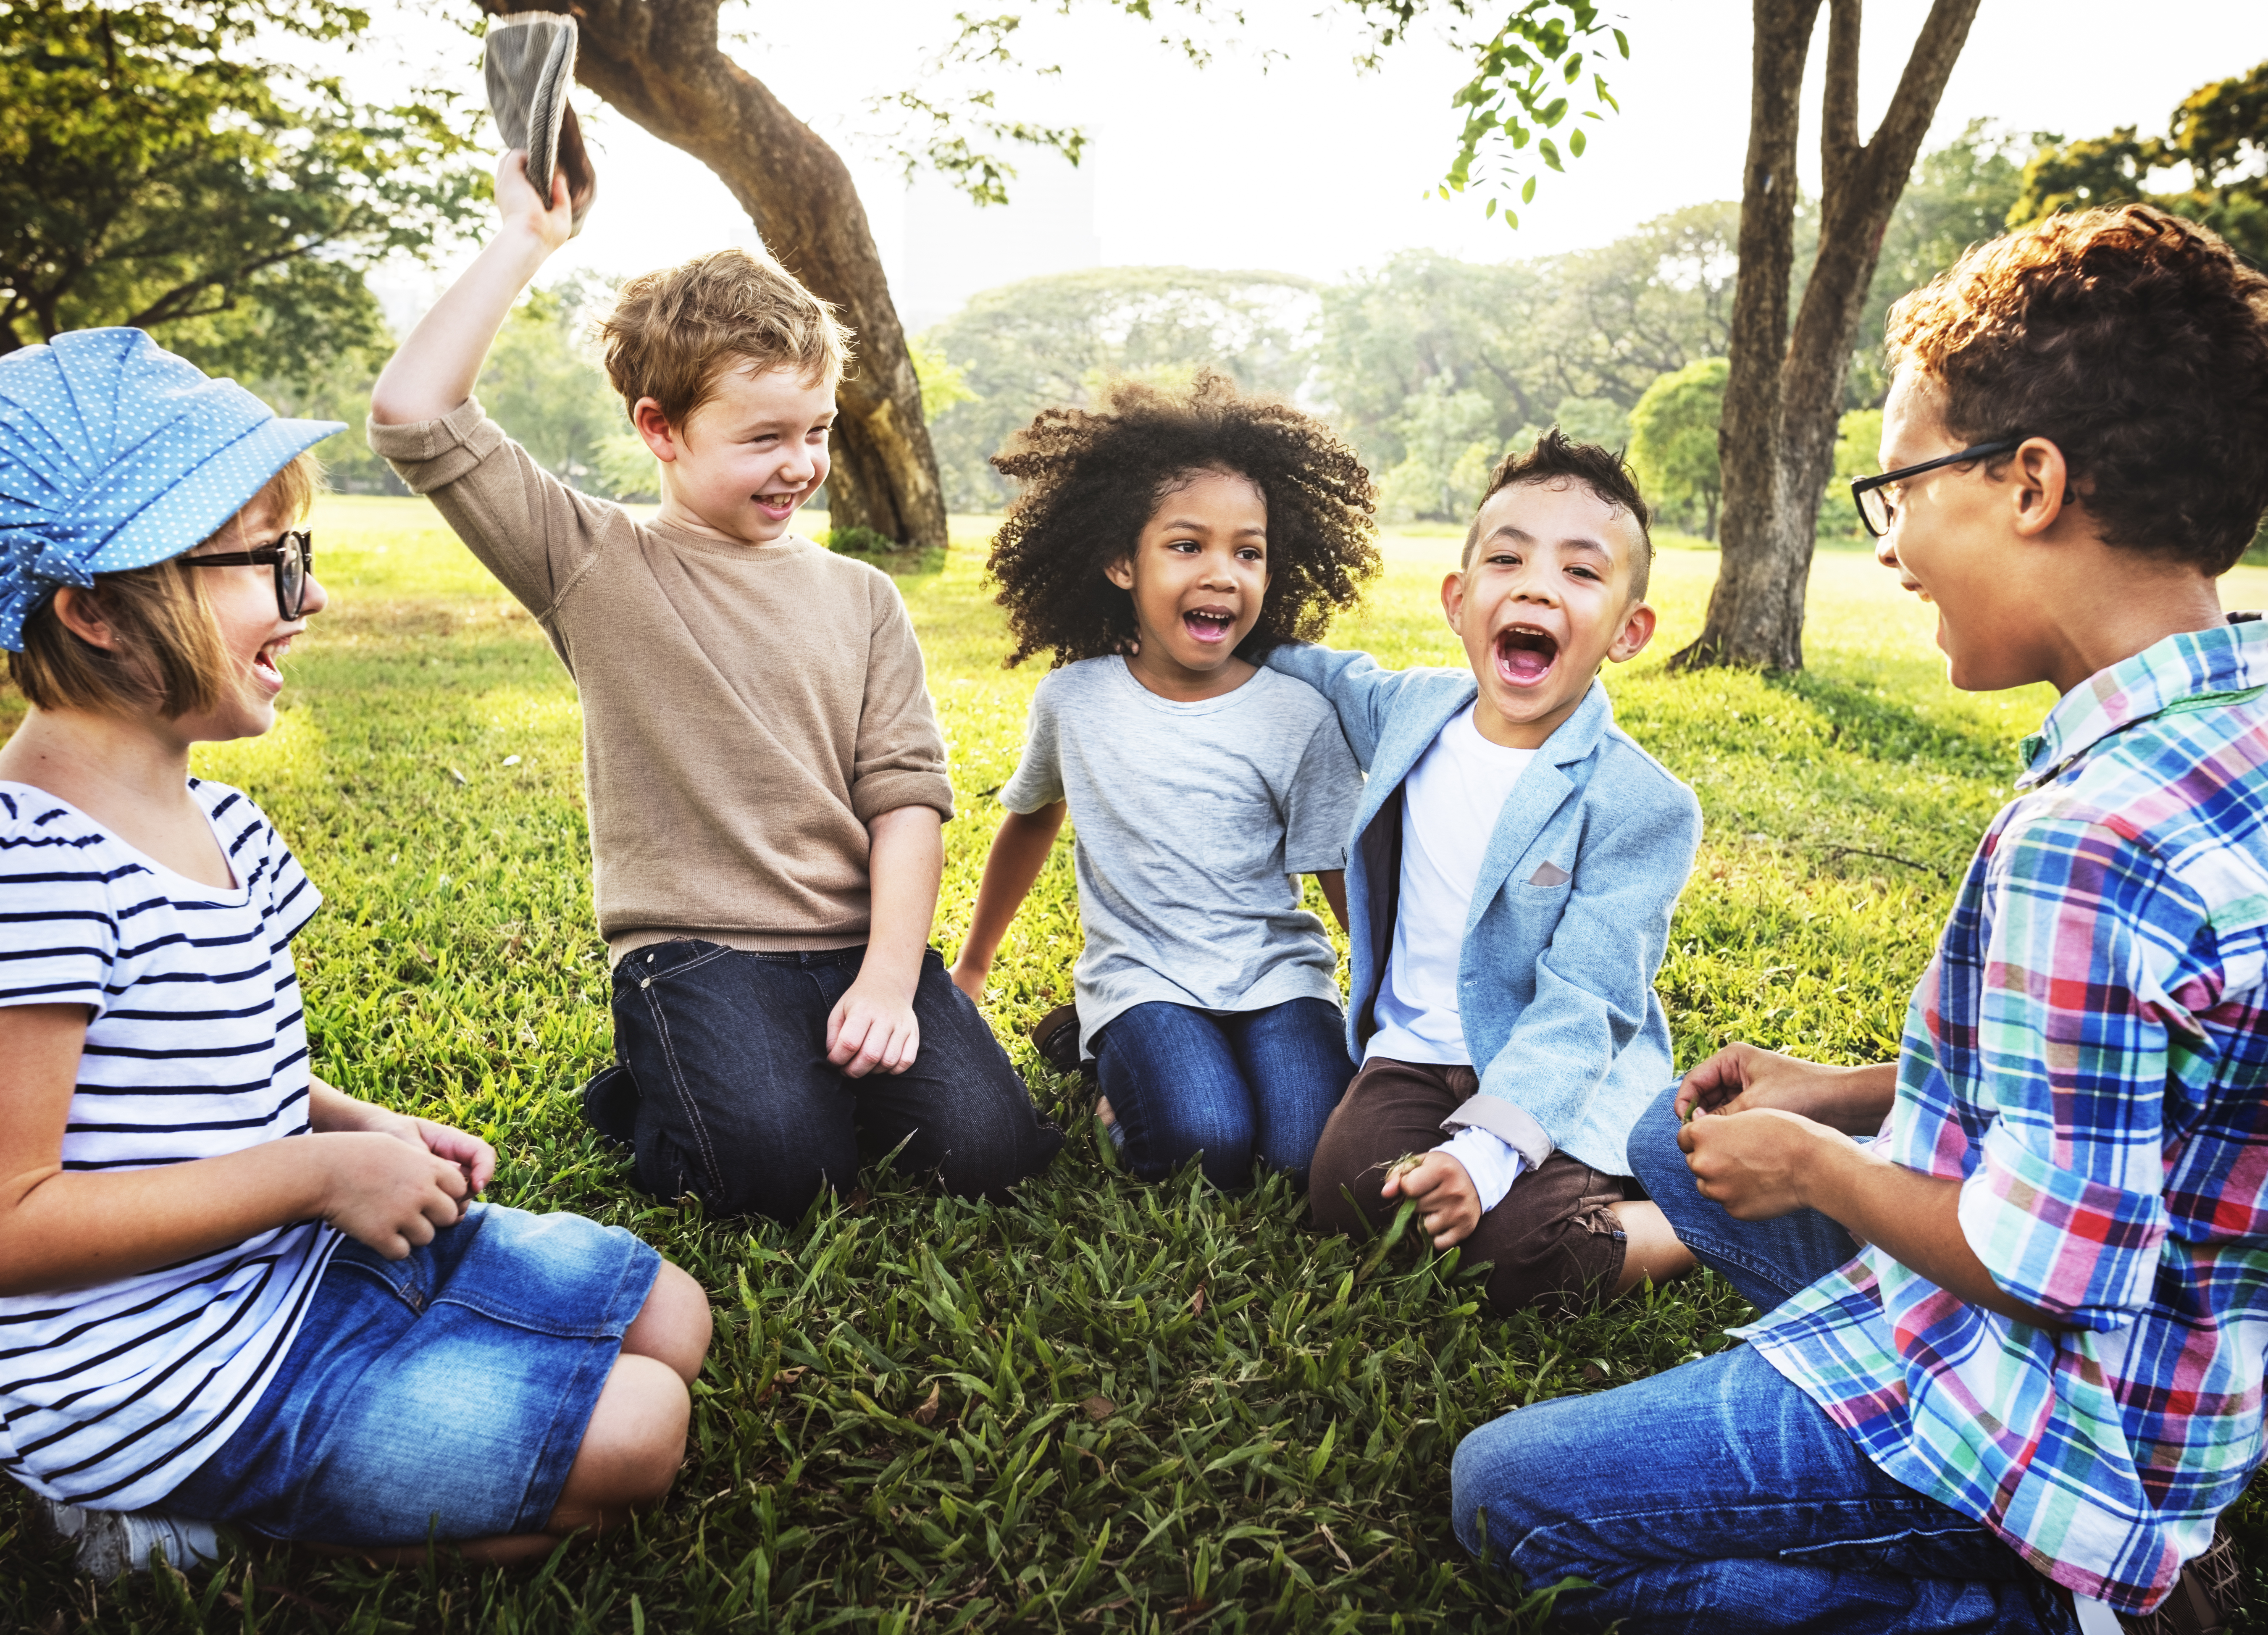 Five children sitting in semi-circle smiling or laughing